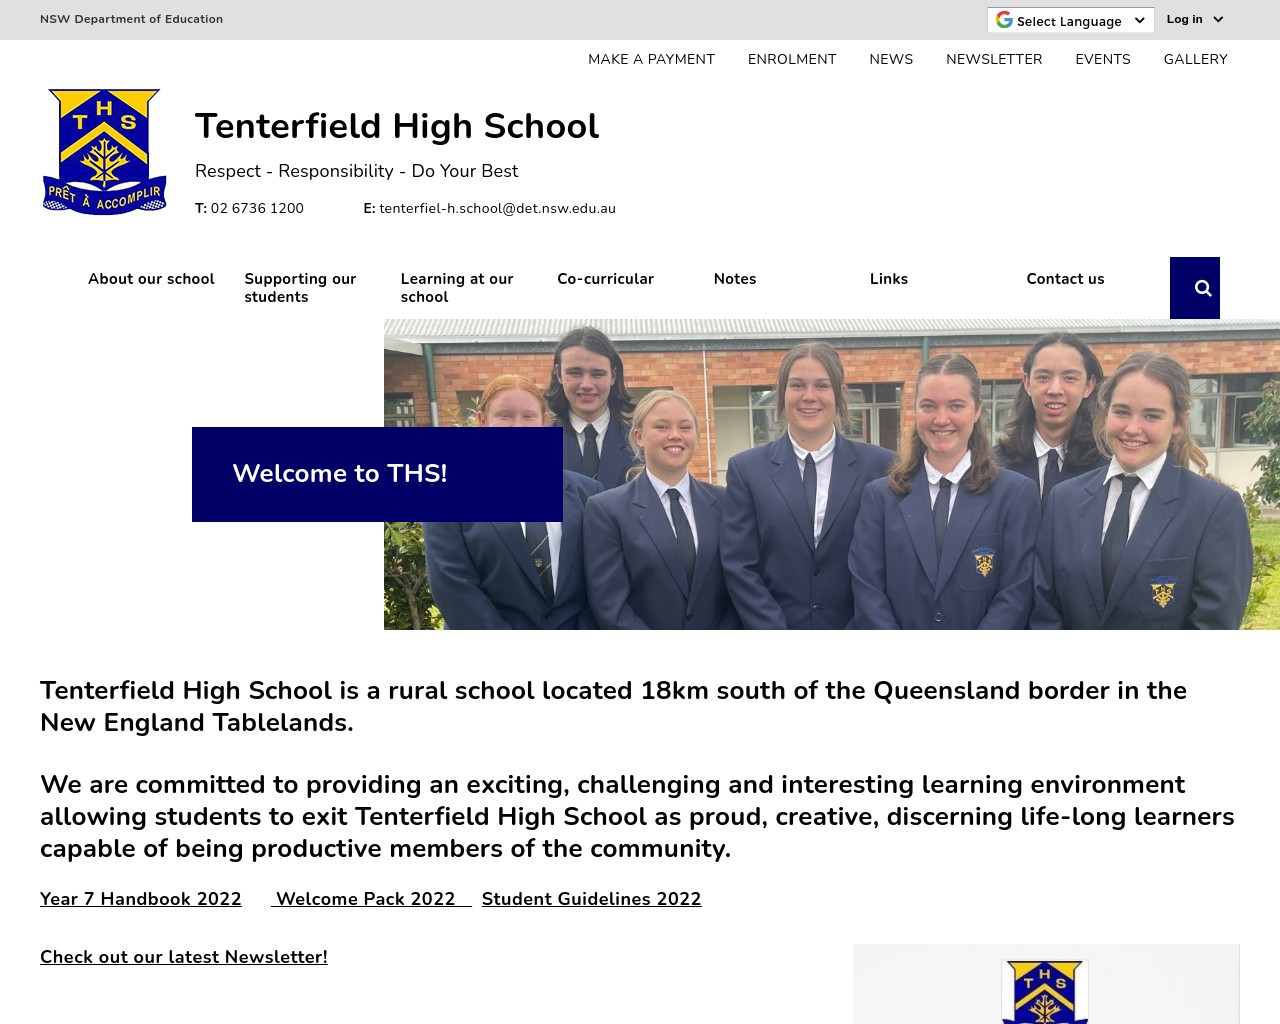 Tenterfield High School